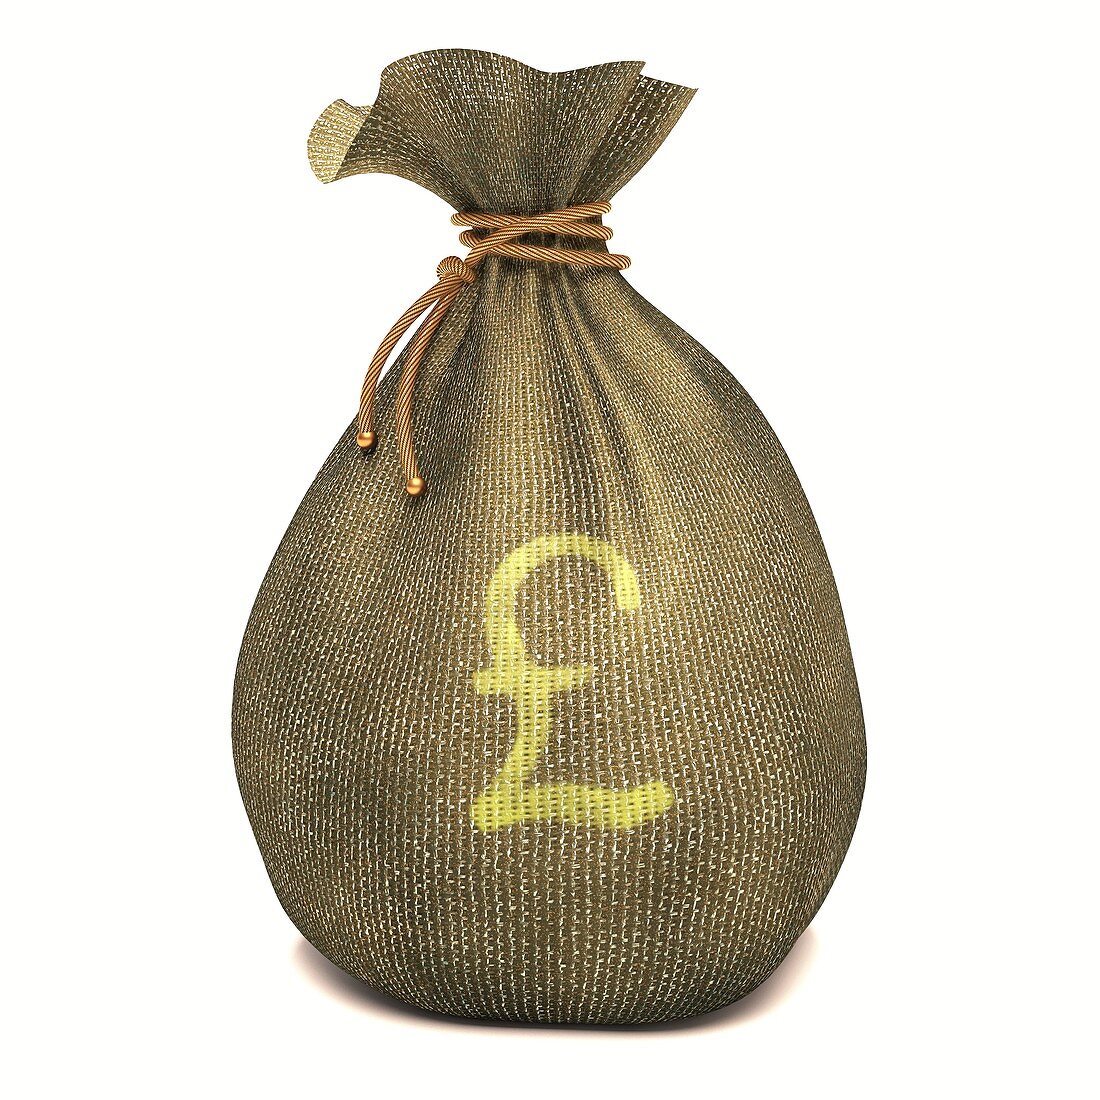 Bag with British pound sign,illustration